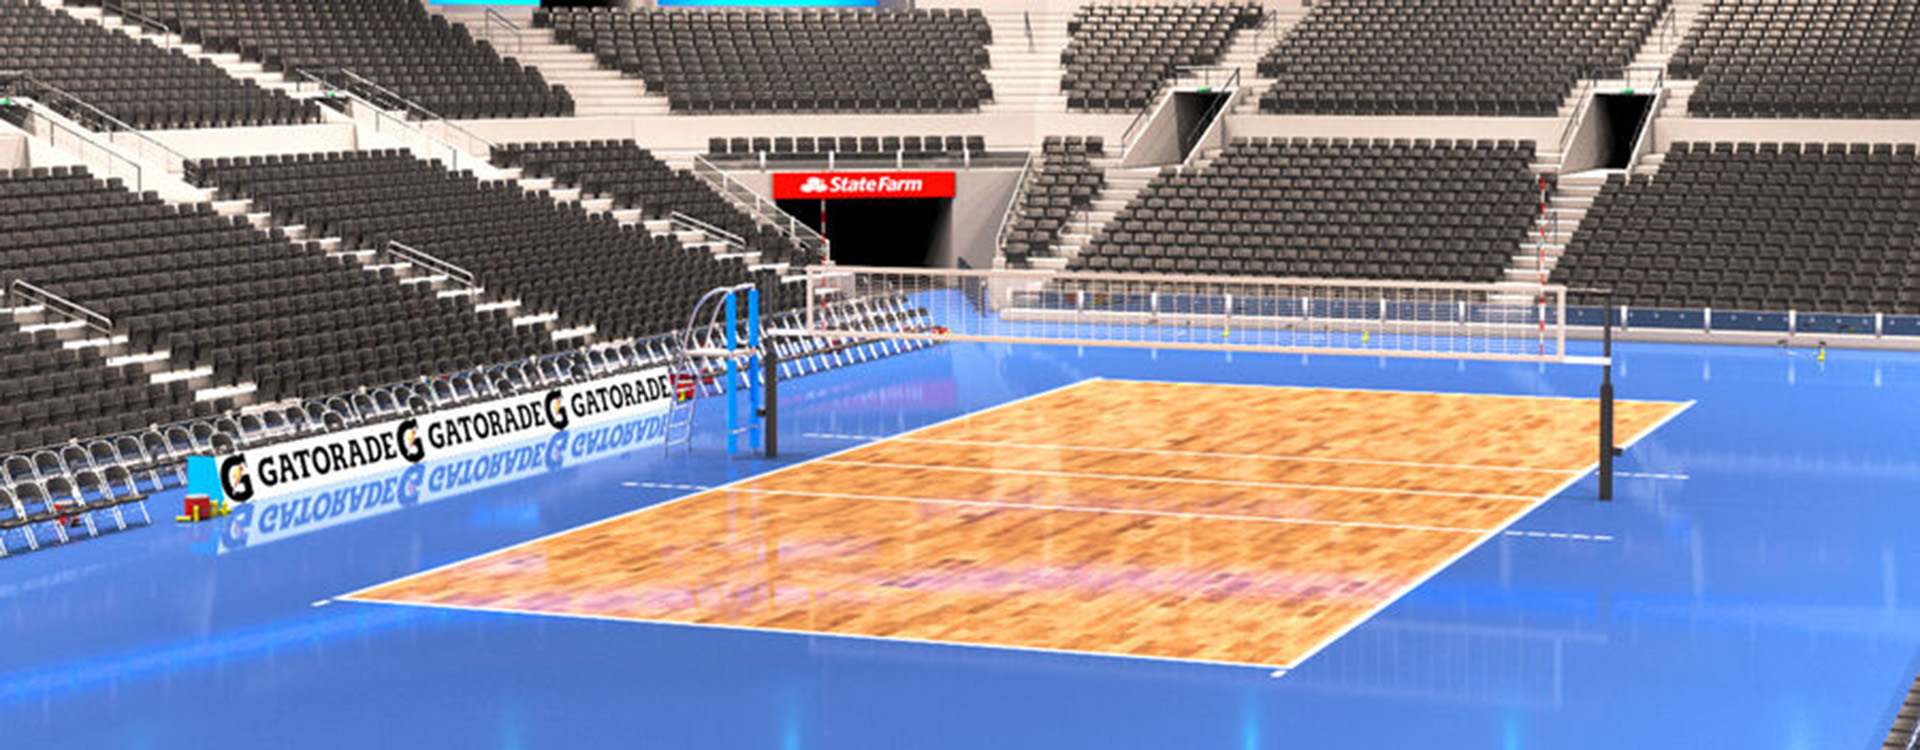 Boleibol Court6